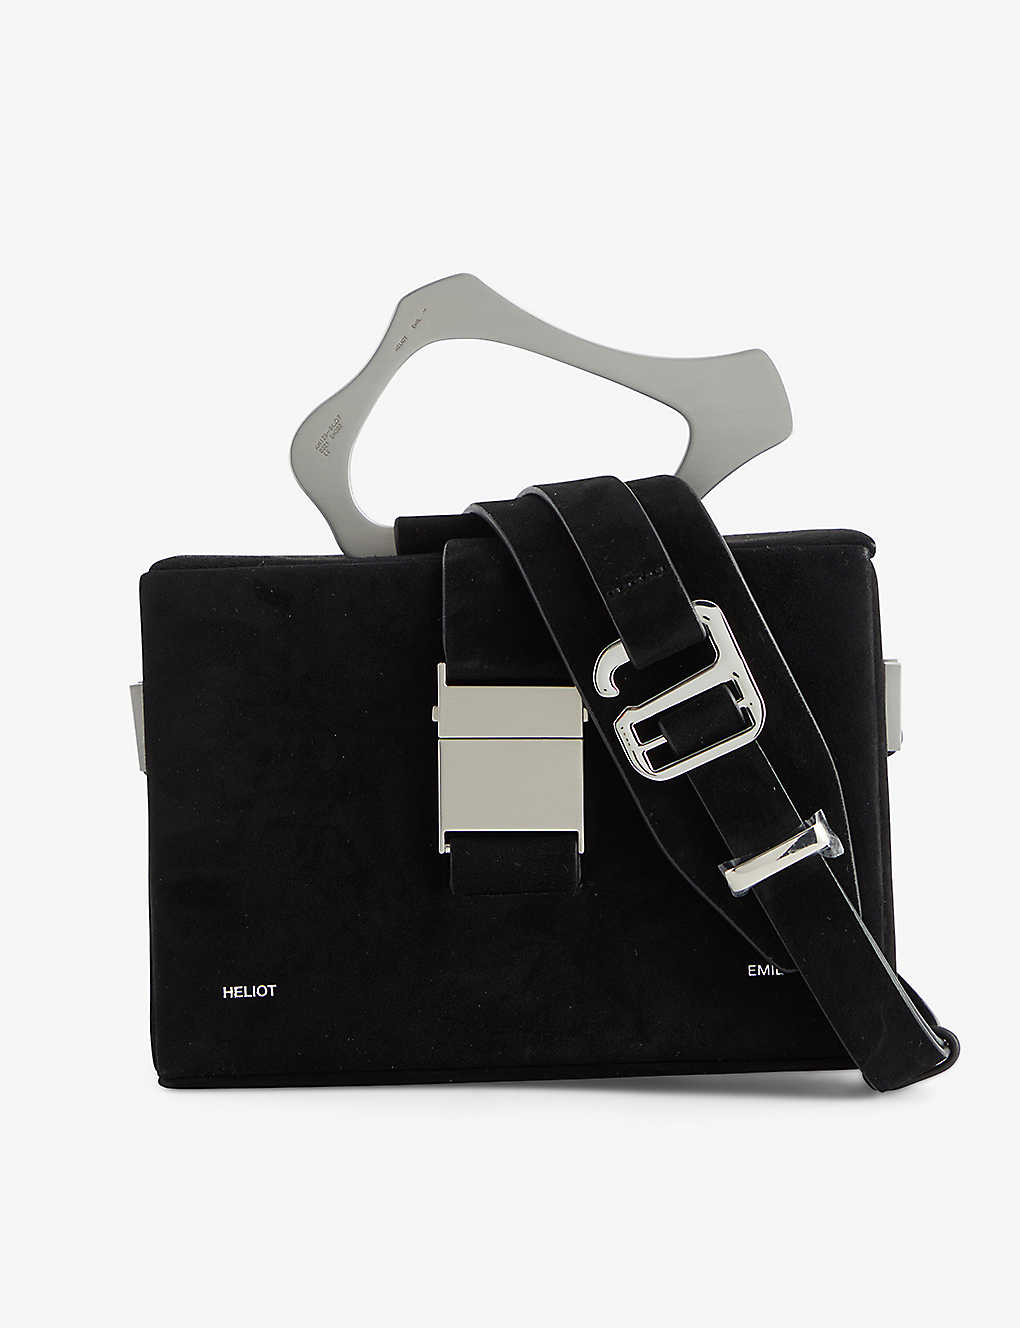 Heliot Emil Black Foiled-branding Structured Suede Top-handle Bag